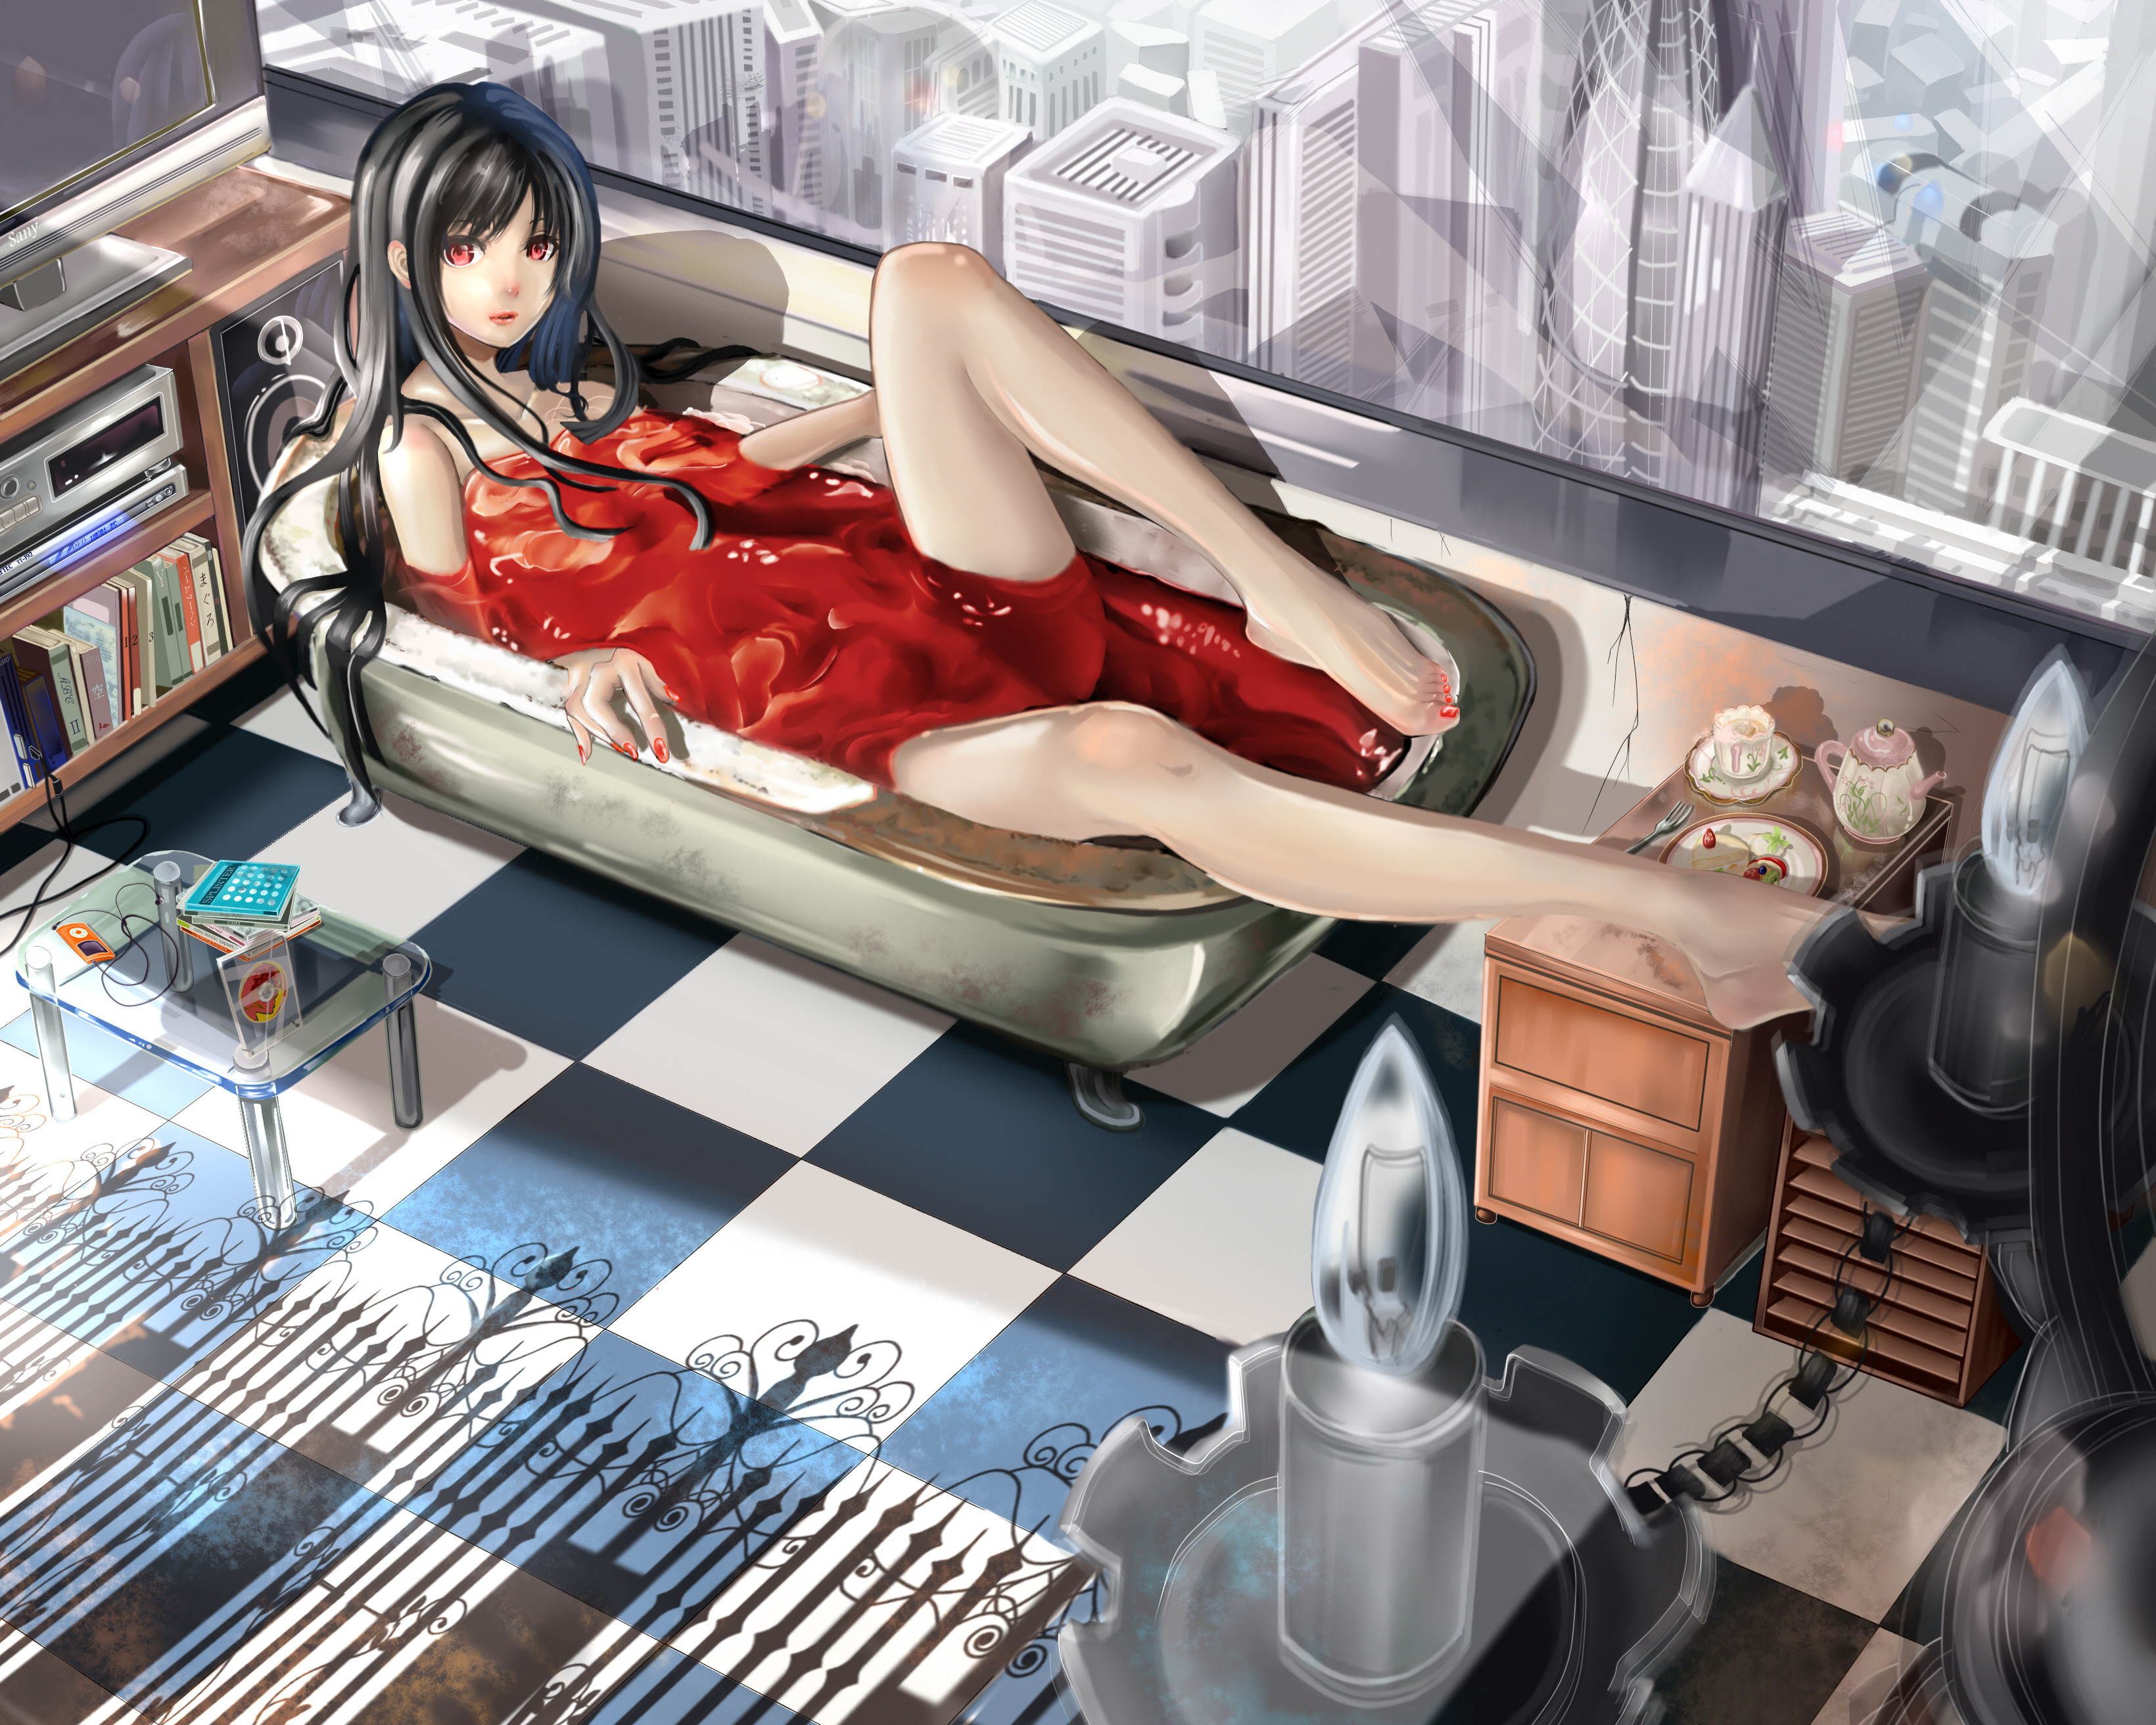 Wallpaper Bathroom Blood Anime Window Bath Desktop